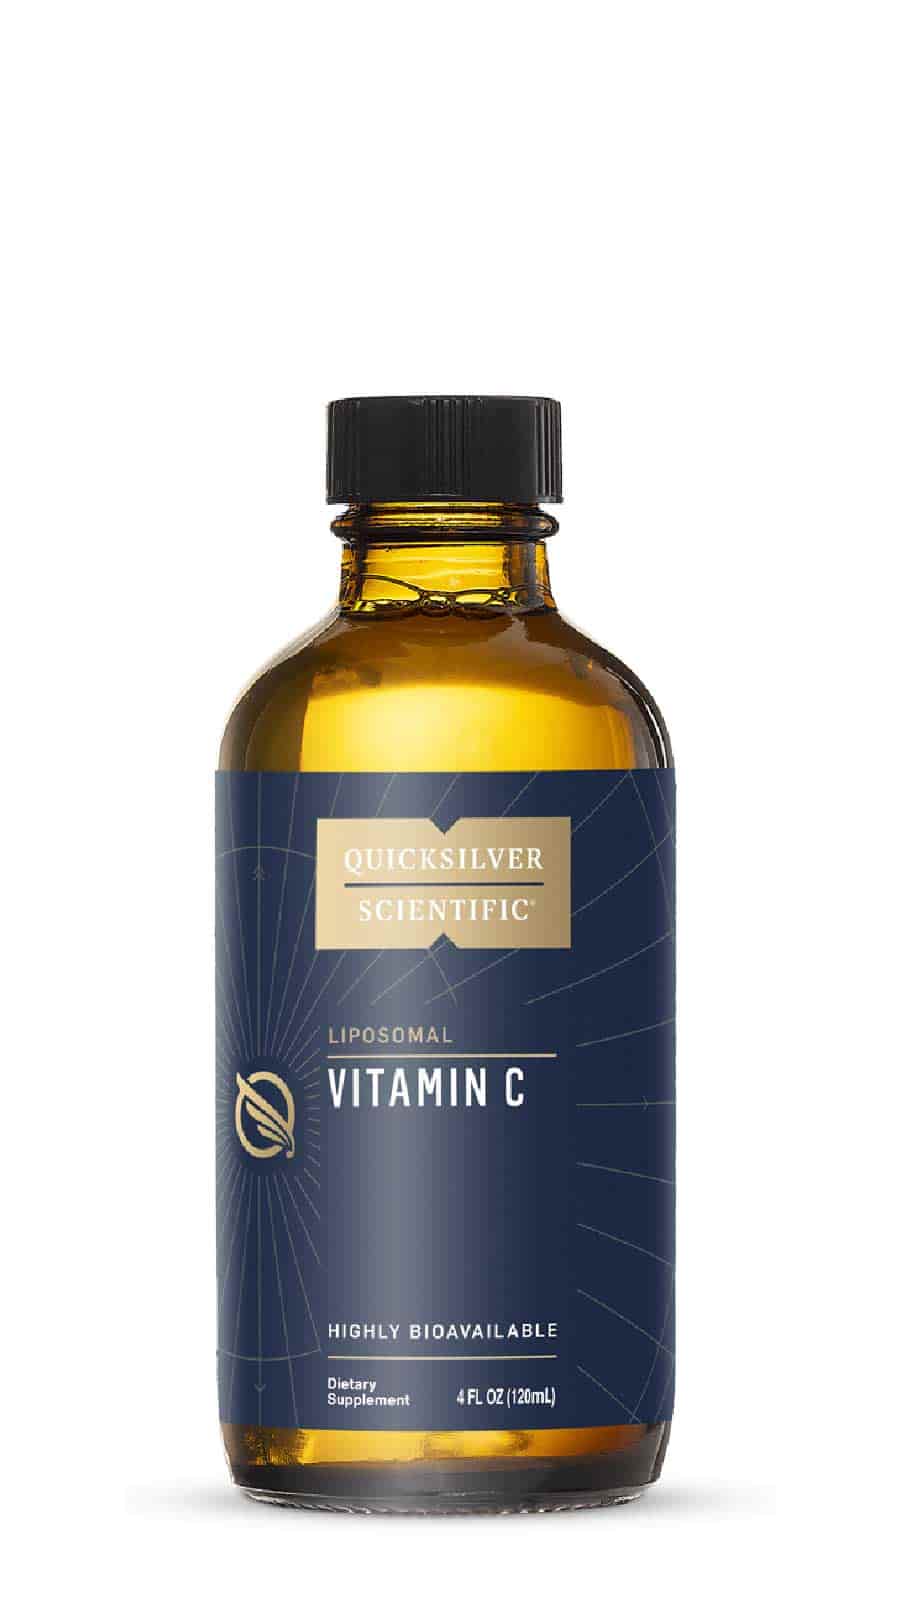 Koop Quicksilver Scientific Liposomal Vitamin C bij LiveHelfi